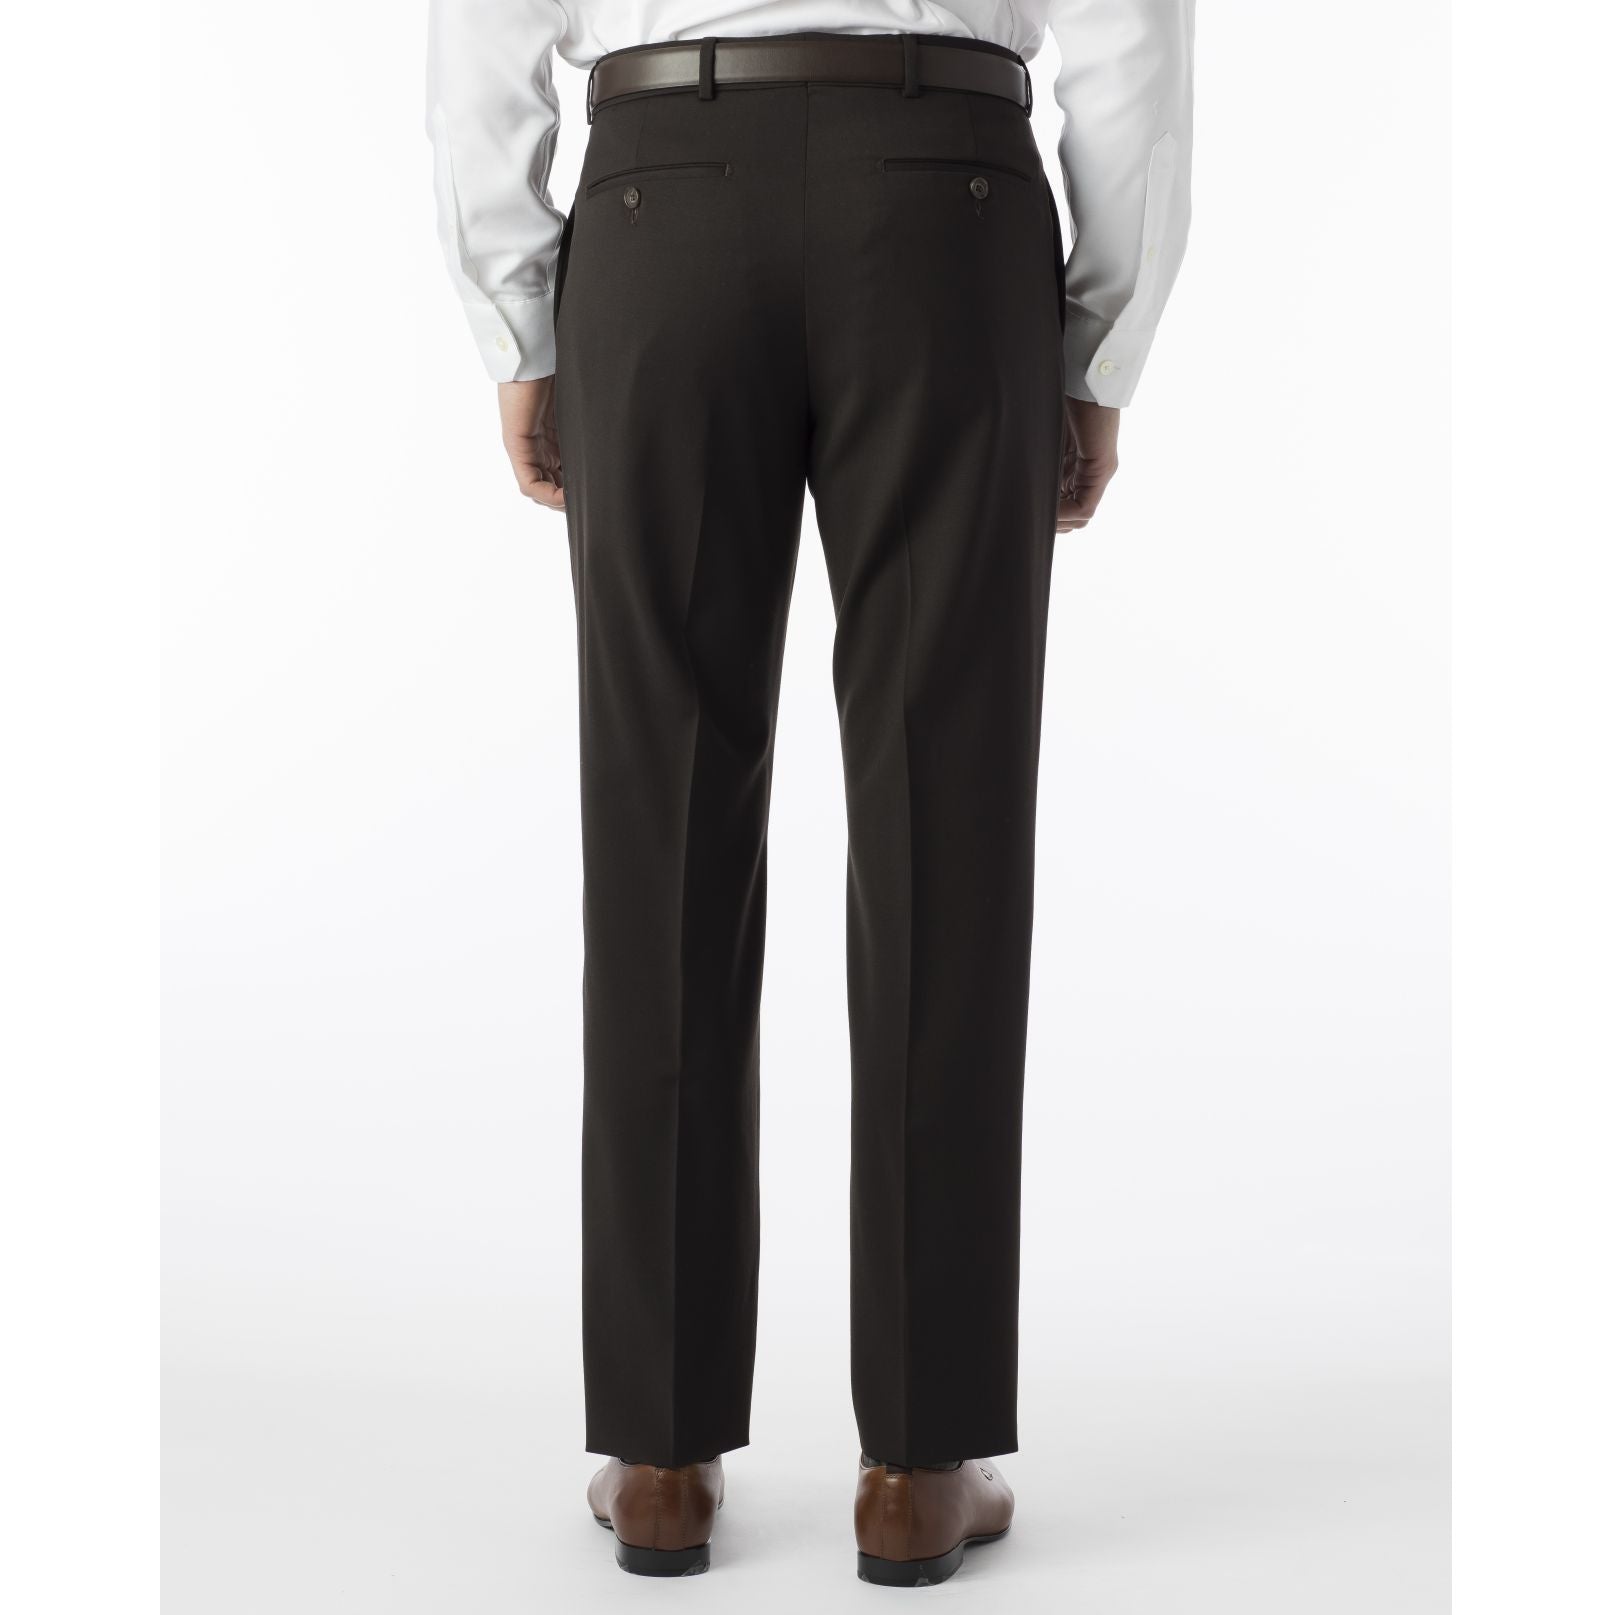 Super 120s Wool Gabardine Comfort-EZE Trouser in Brown (Flat Front Models) by Ballin